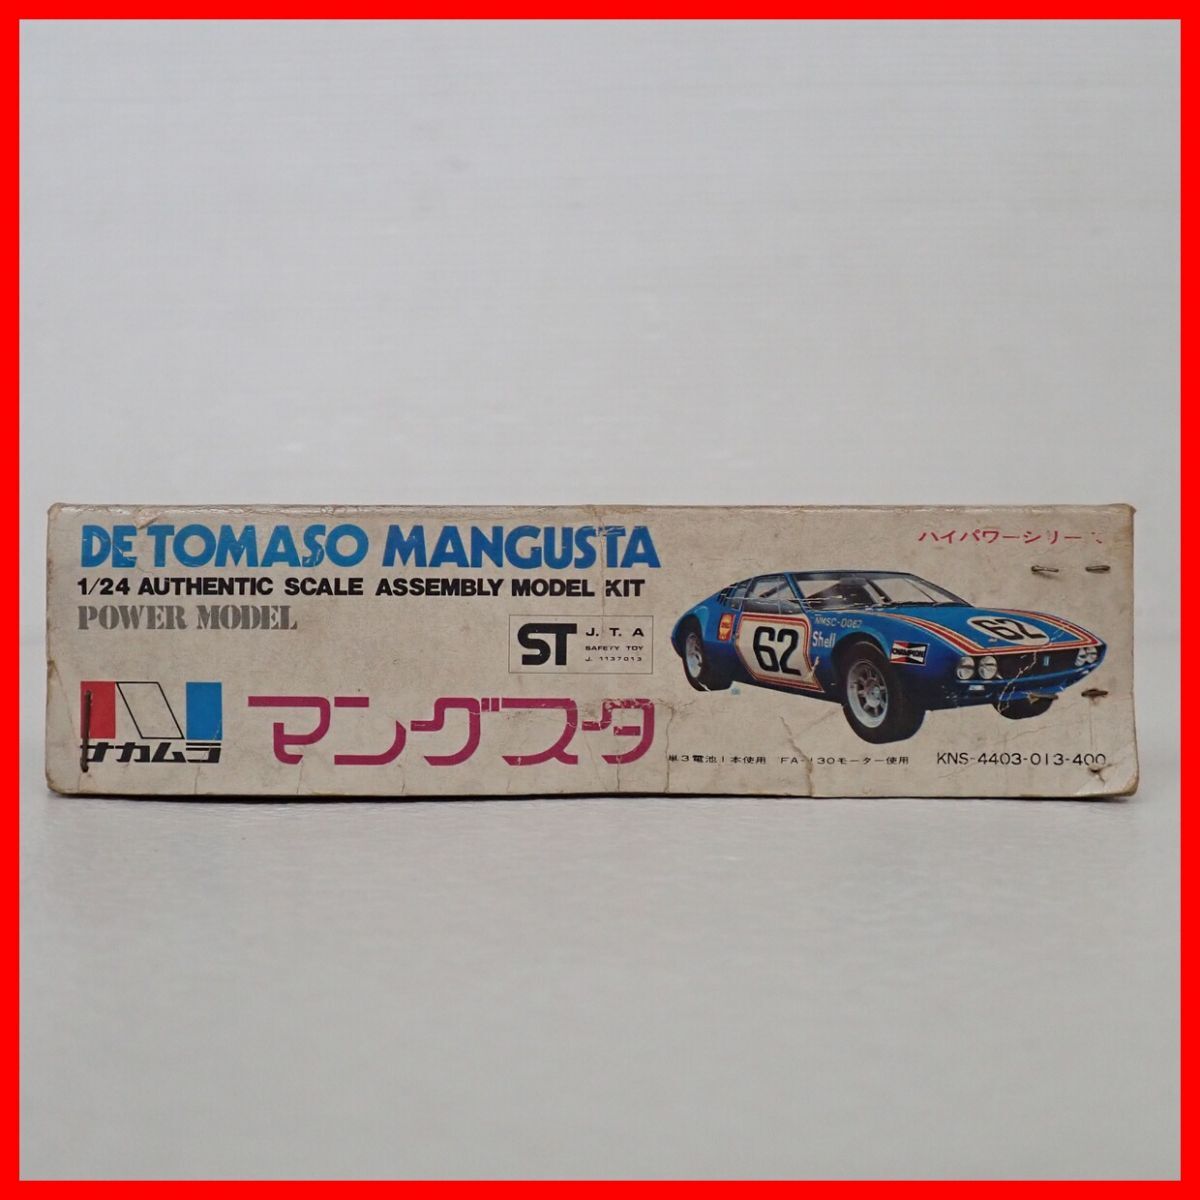 * not yet constructed naka blur 1/24te* Tomaso man g start #62 DE TOMASO MANGUSTA plastic model plastic model Nakamura industry [10